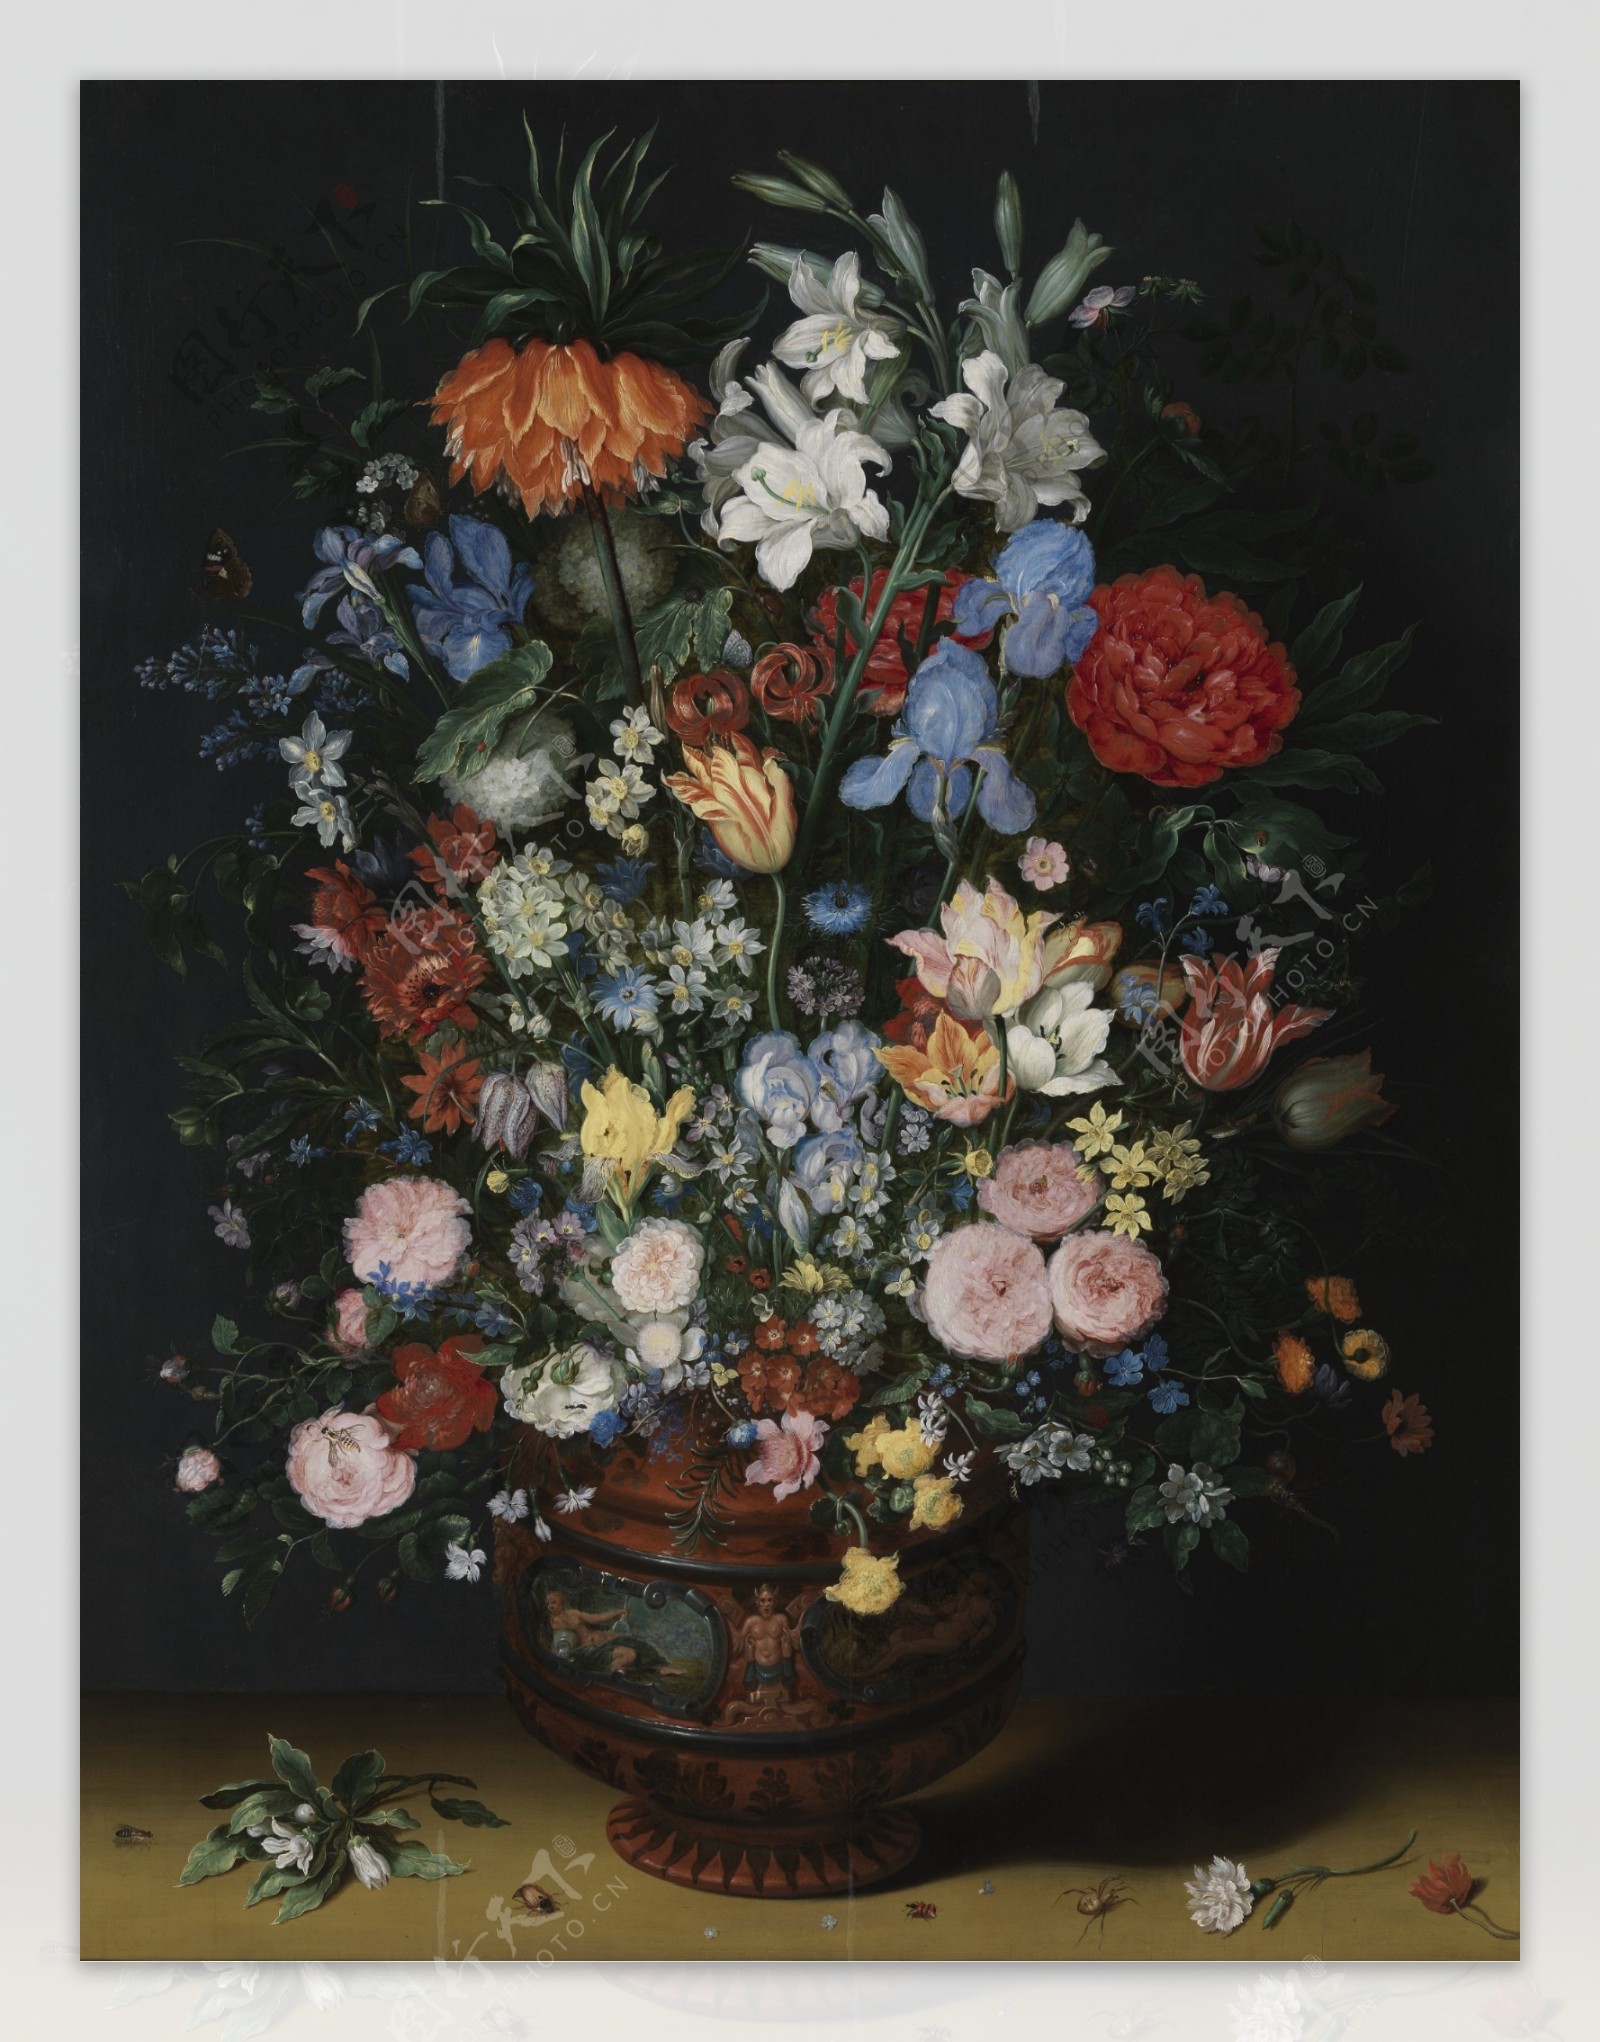 JanBrueghelIFlowersinavase花卉水果蔬菜器皿静物印象画派写实主义油画装饰画